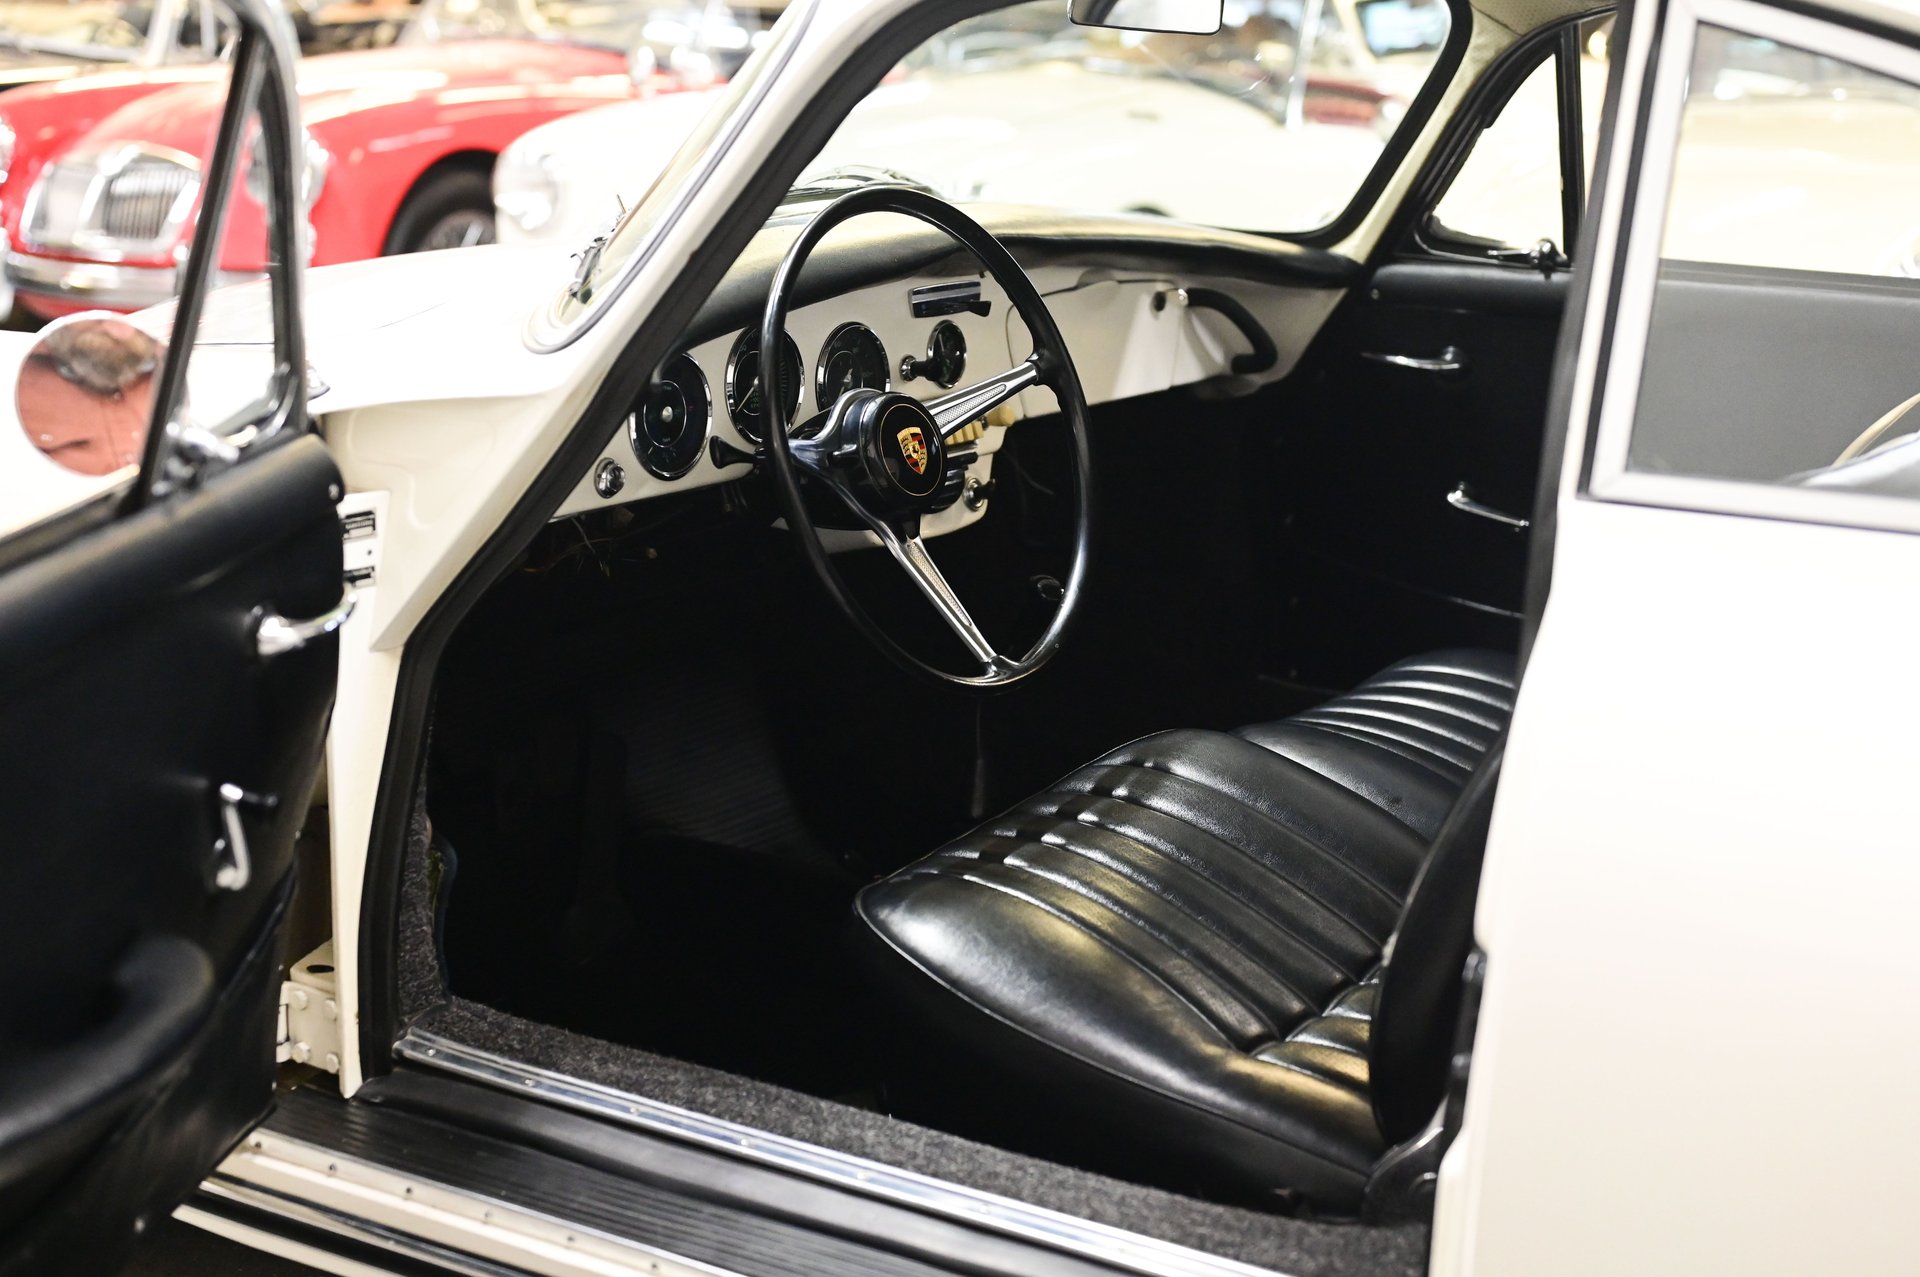 130138 | 1964 Porsche 356 C Coupe | Frazier Motorcar Company